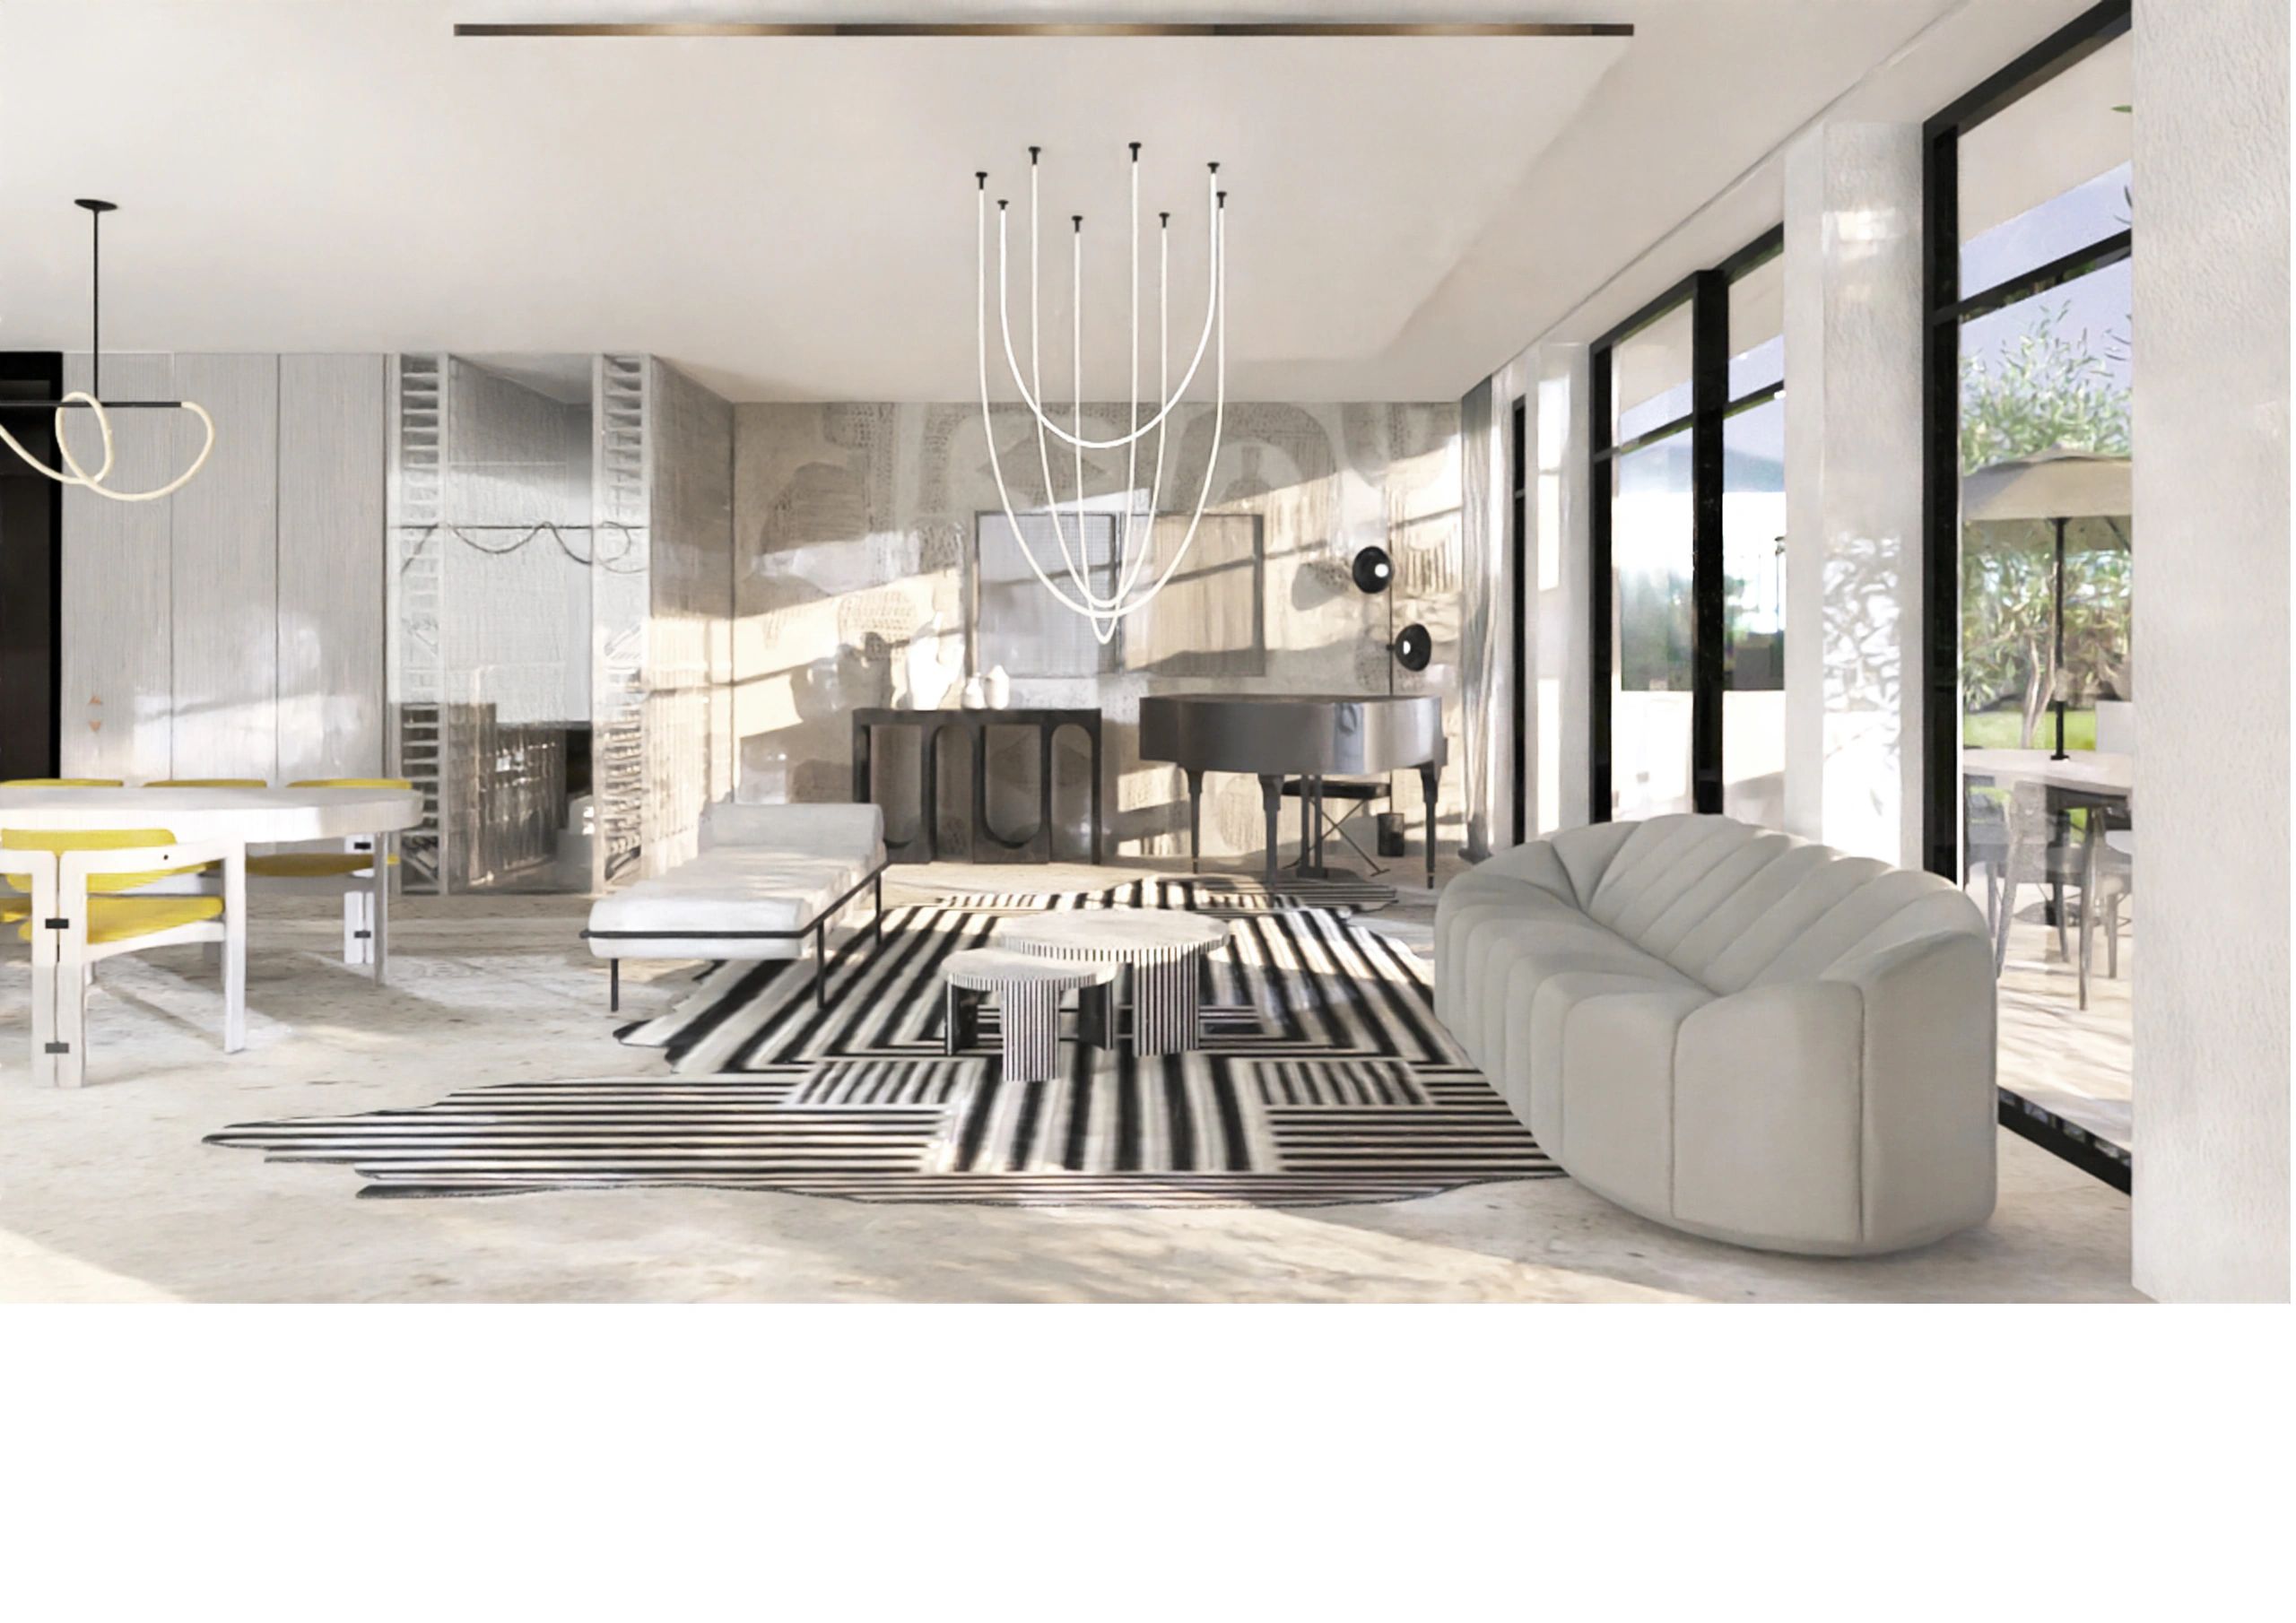 Luxury penthouse interiors, Netherlands